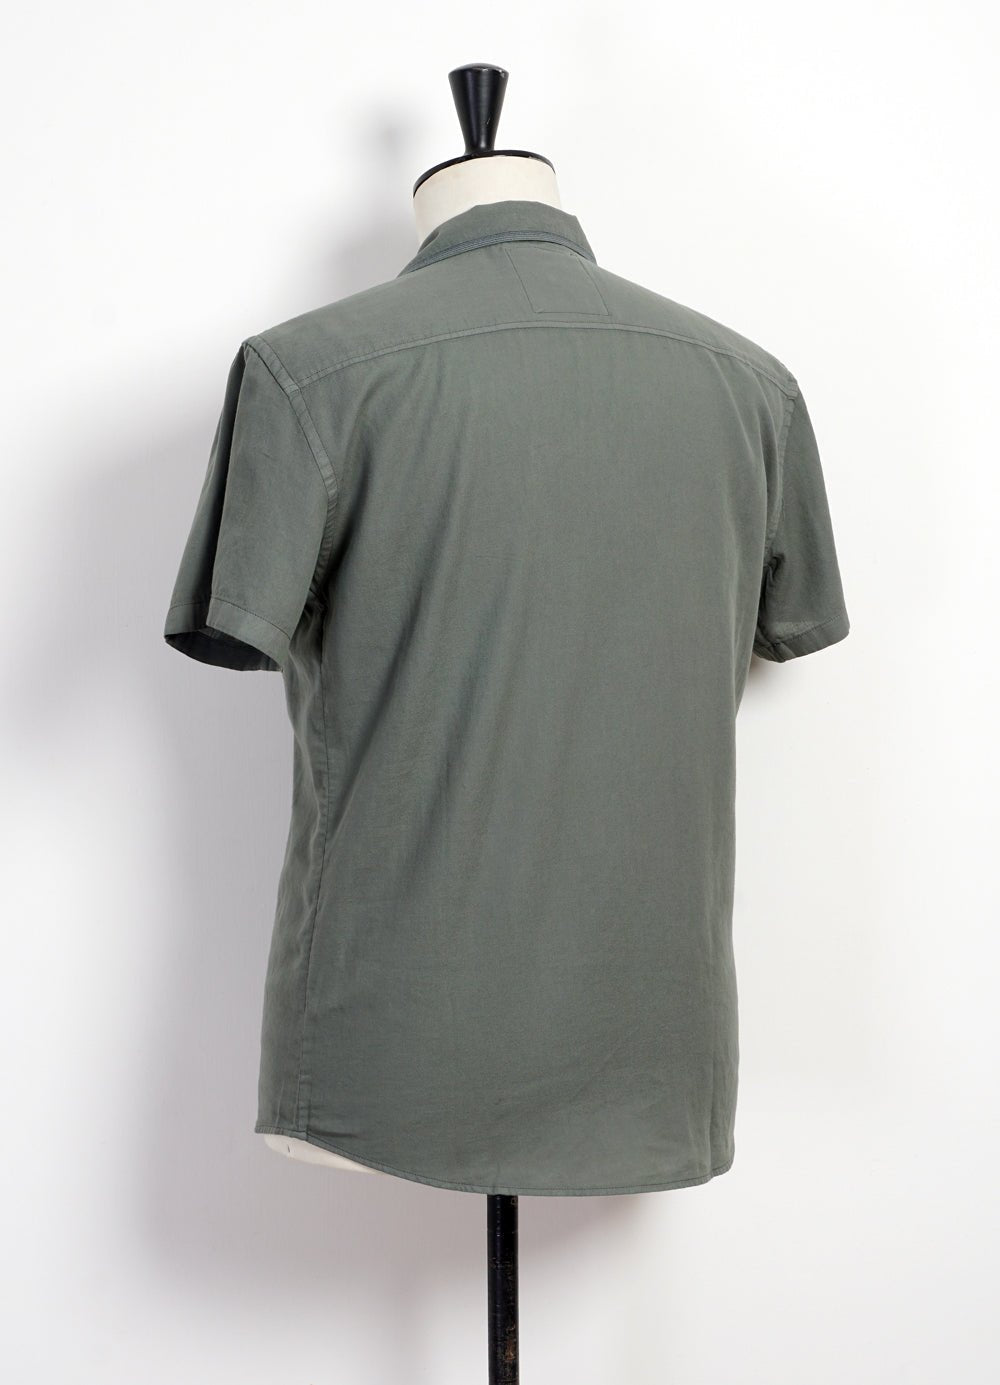 HANSEN GARMENTS - JONNY | Short Sleeve Shirt | Eucalyptus - HANSEN Garments